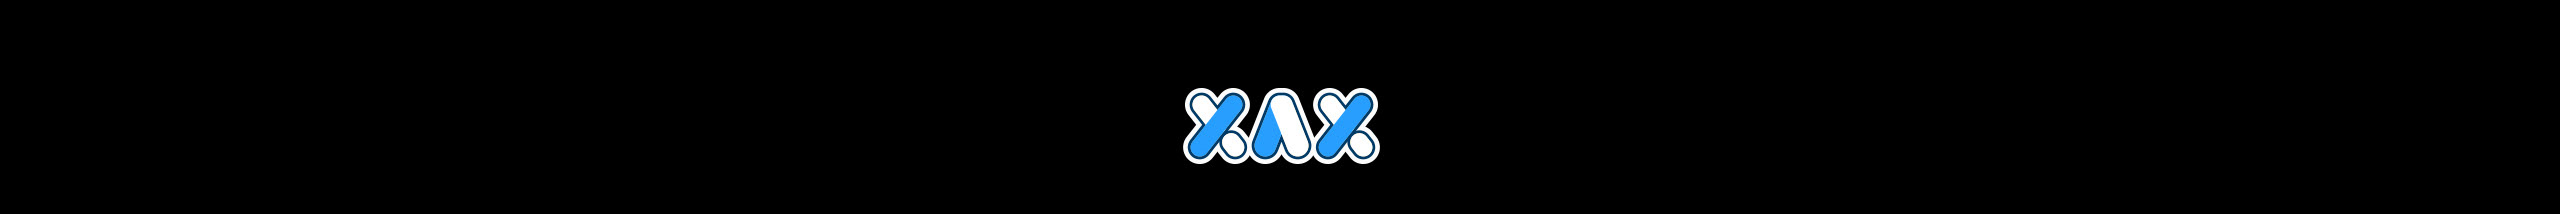 XAX 西瓜's profile banner